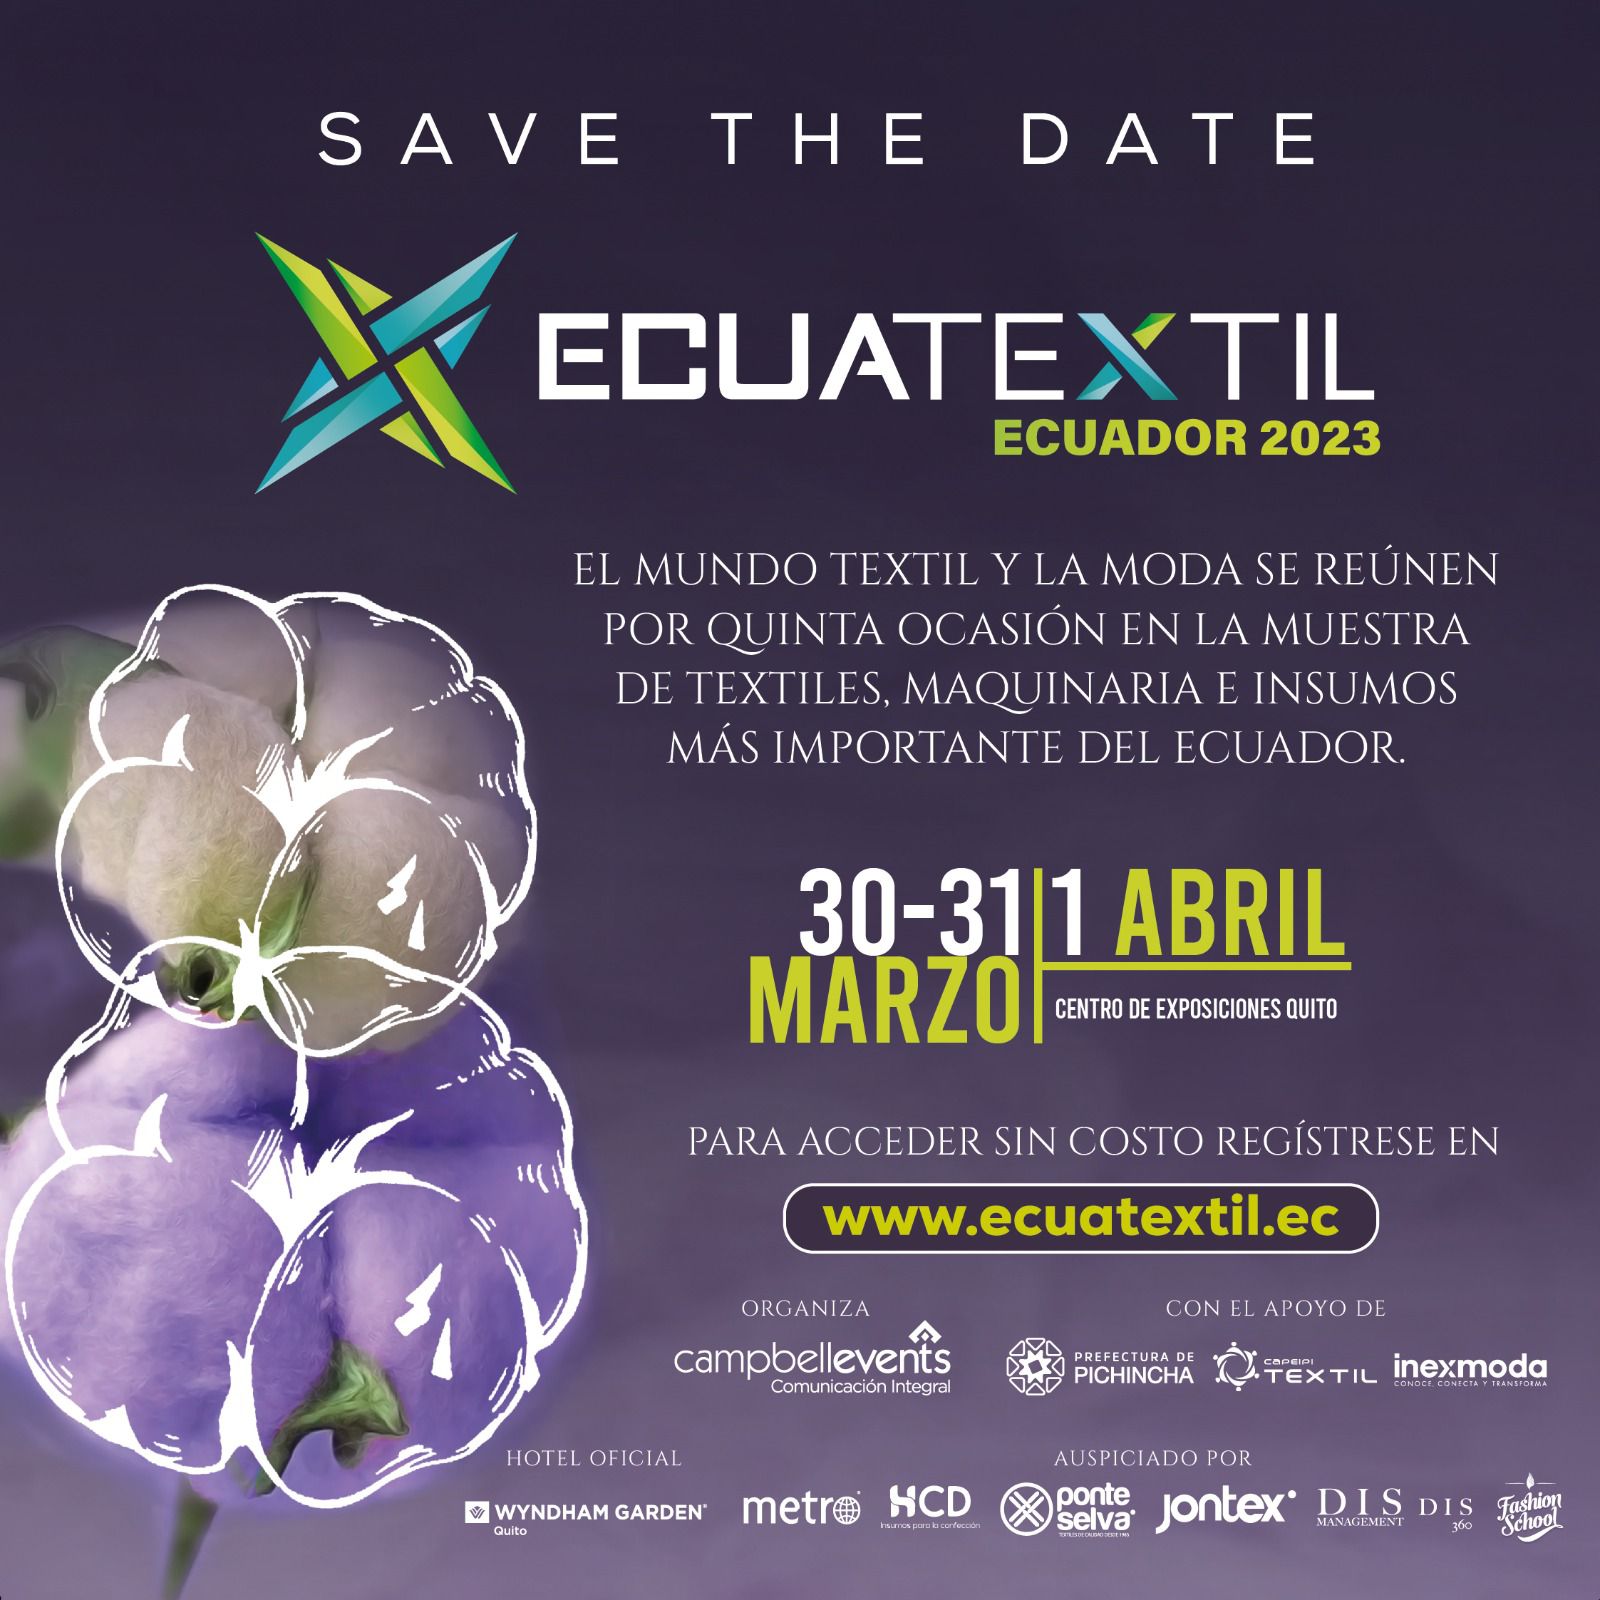 MARCH 30TH TO APRIL 1ST, ECUATEXTILE 2023   ECUADOR